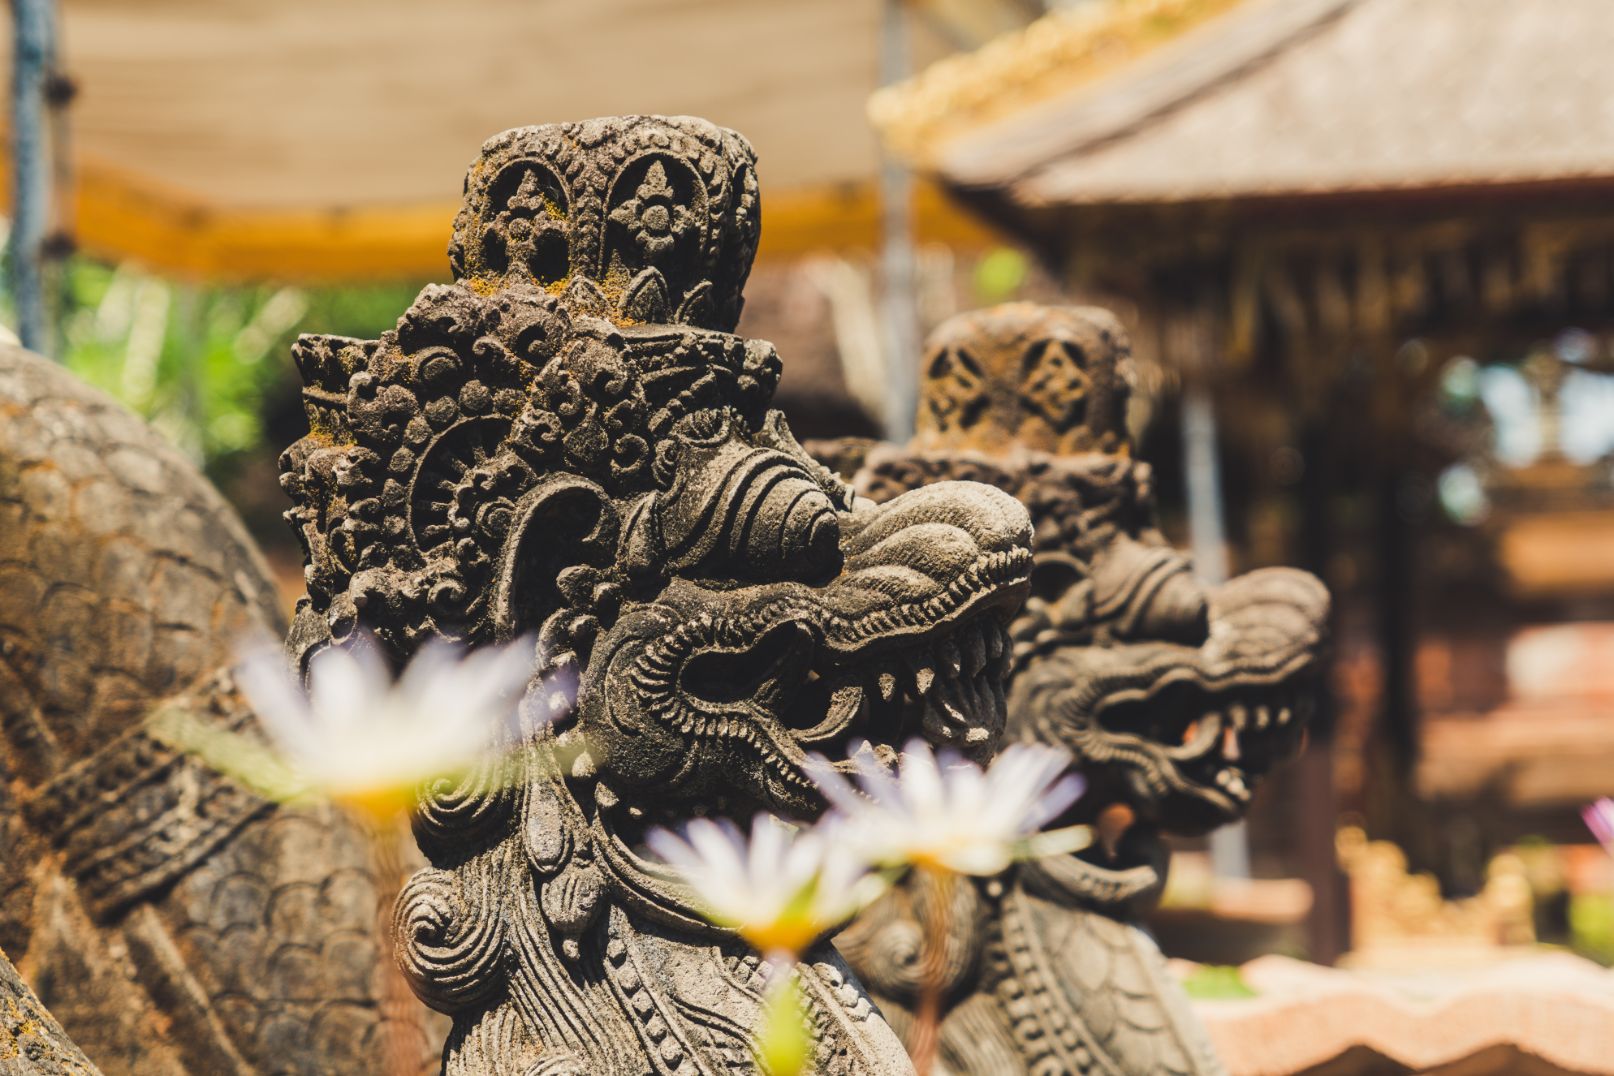 File photo of dragon statues in Bali. Photo: Unsplash